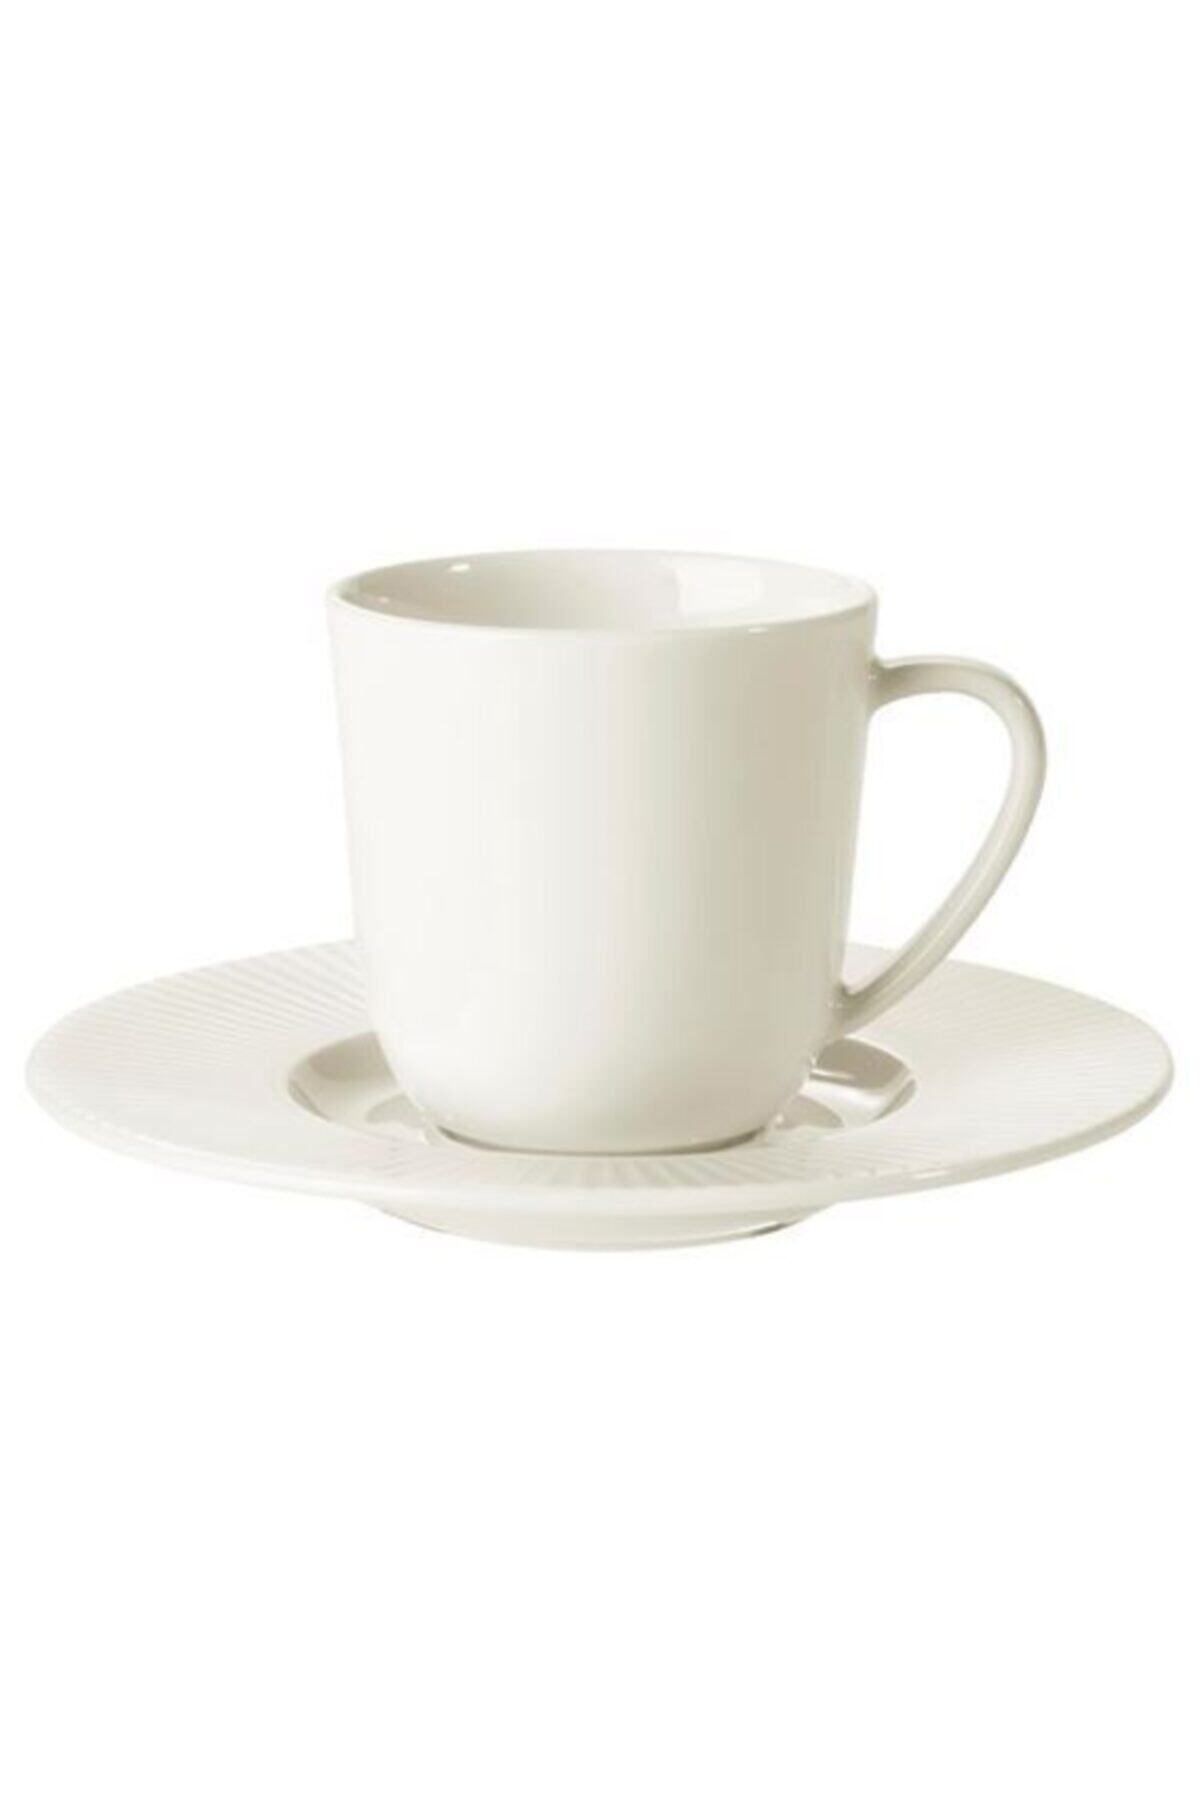 IKEA Ofantlıgt Espresso Kahve Fincanı Kupa Porselen 7cl 1 Adet